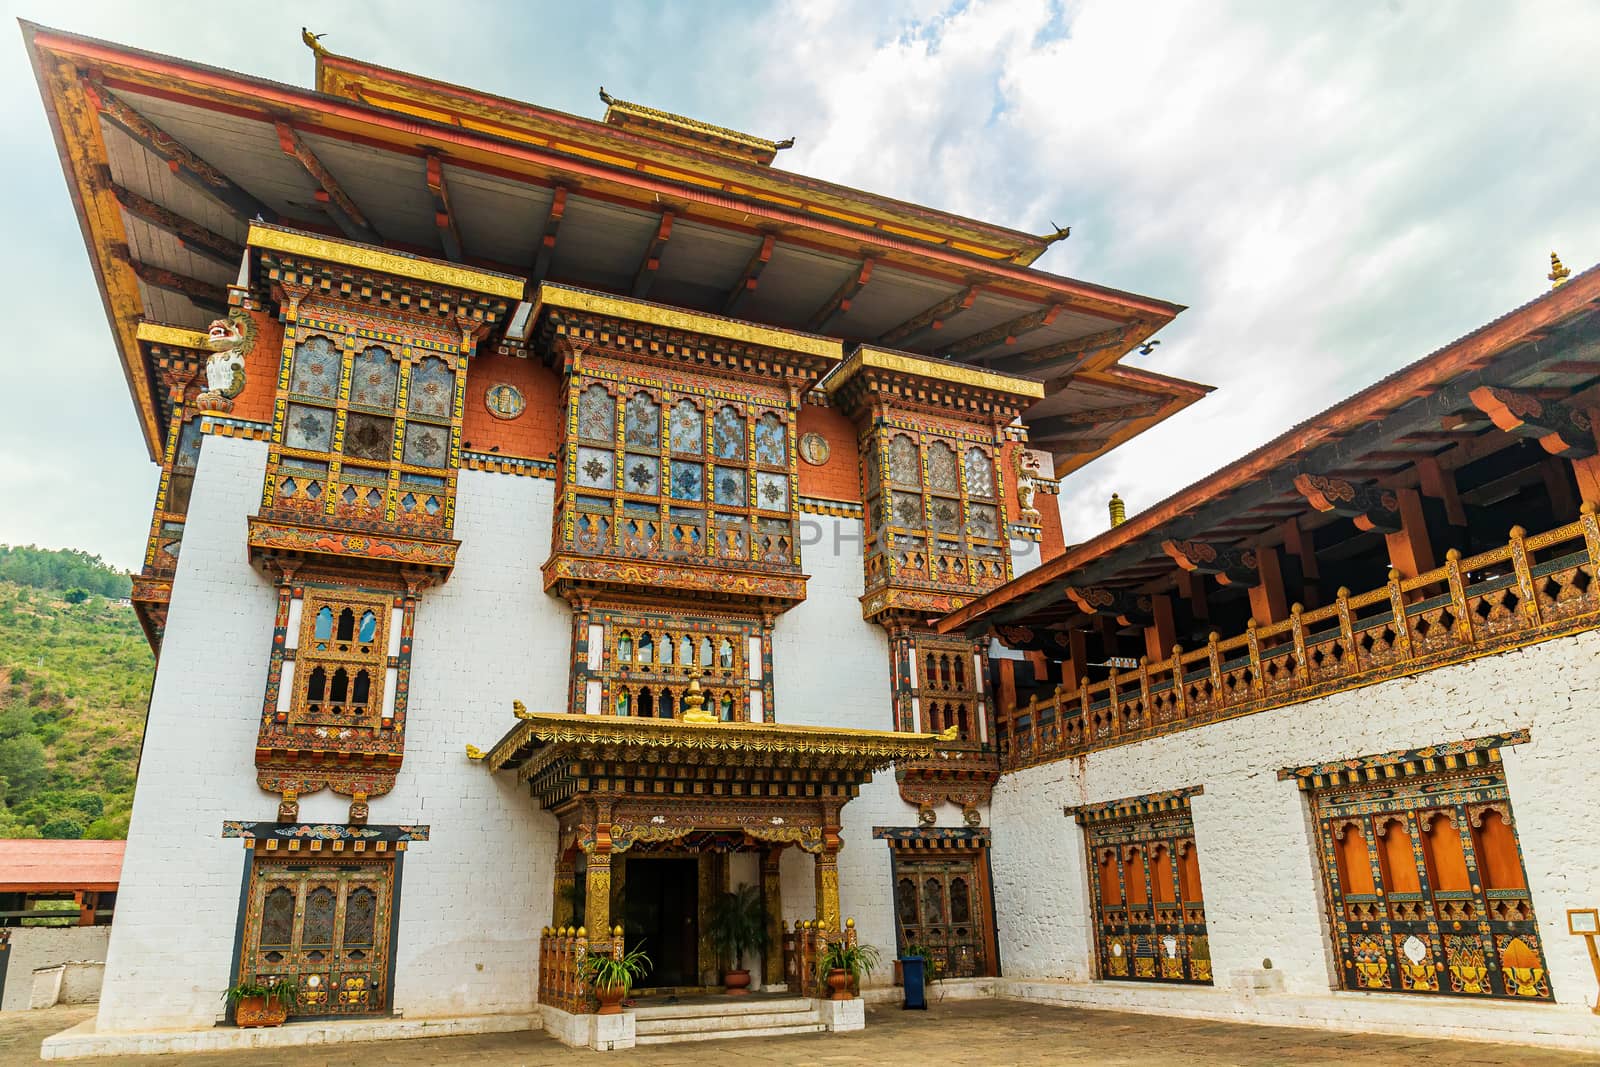 Inside Punkha Dzong with zorig chusum tradition refurbishing